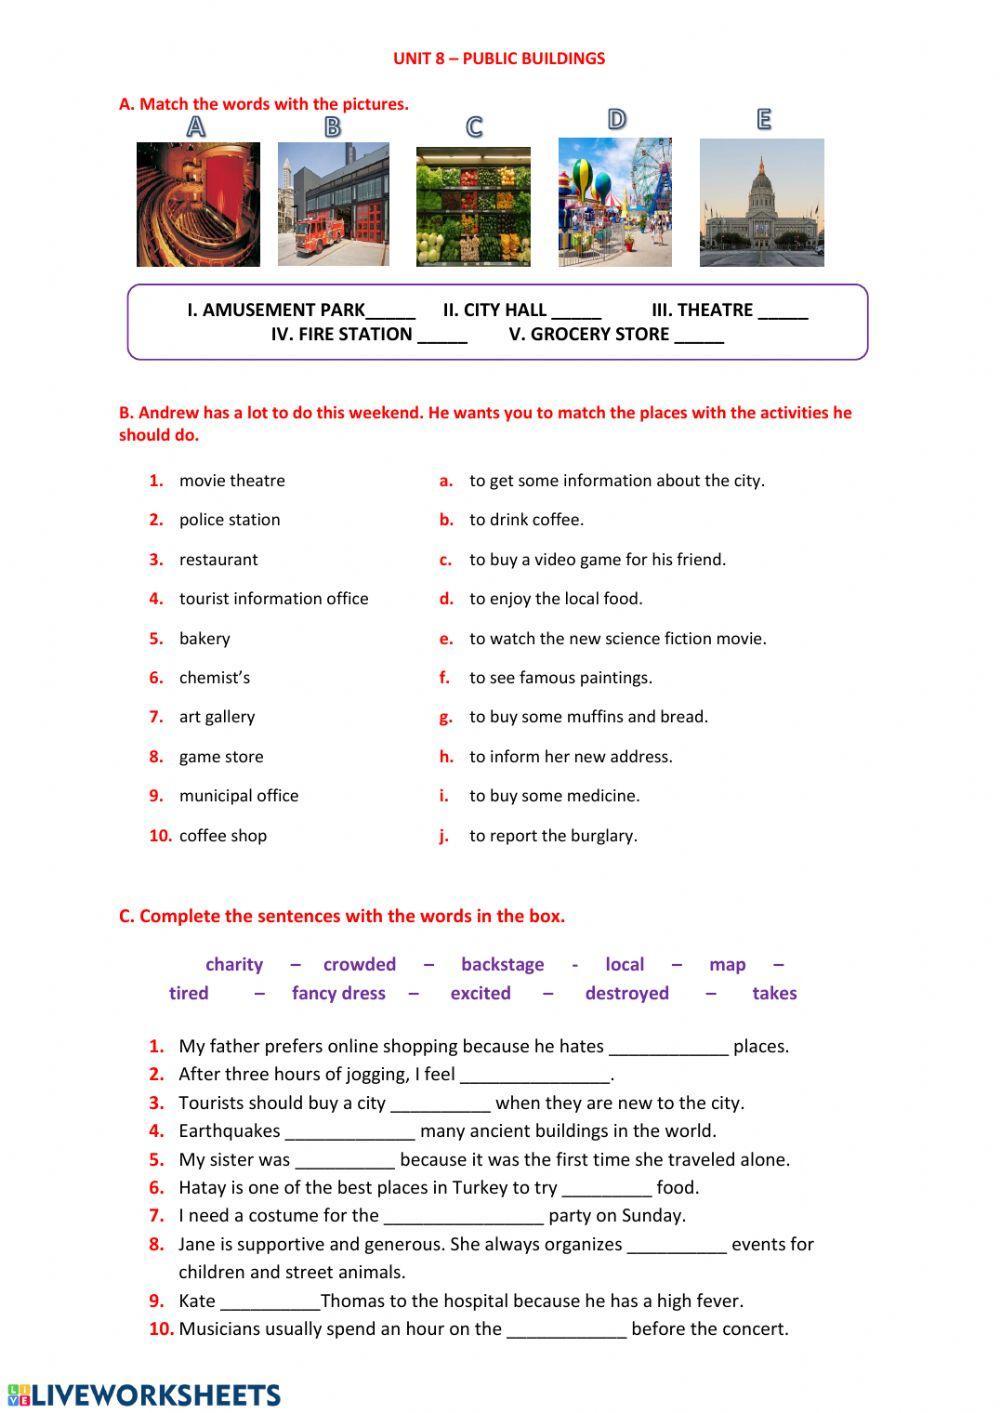 7th Grade - Unit 8 - Worksheet 2